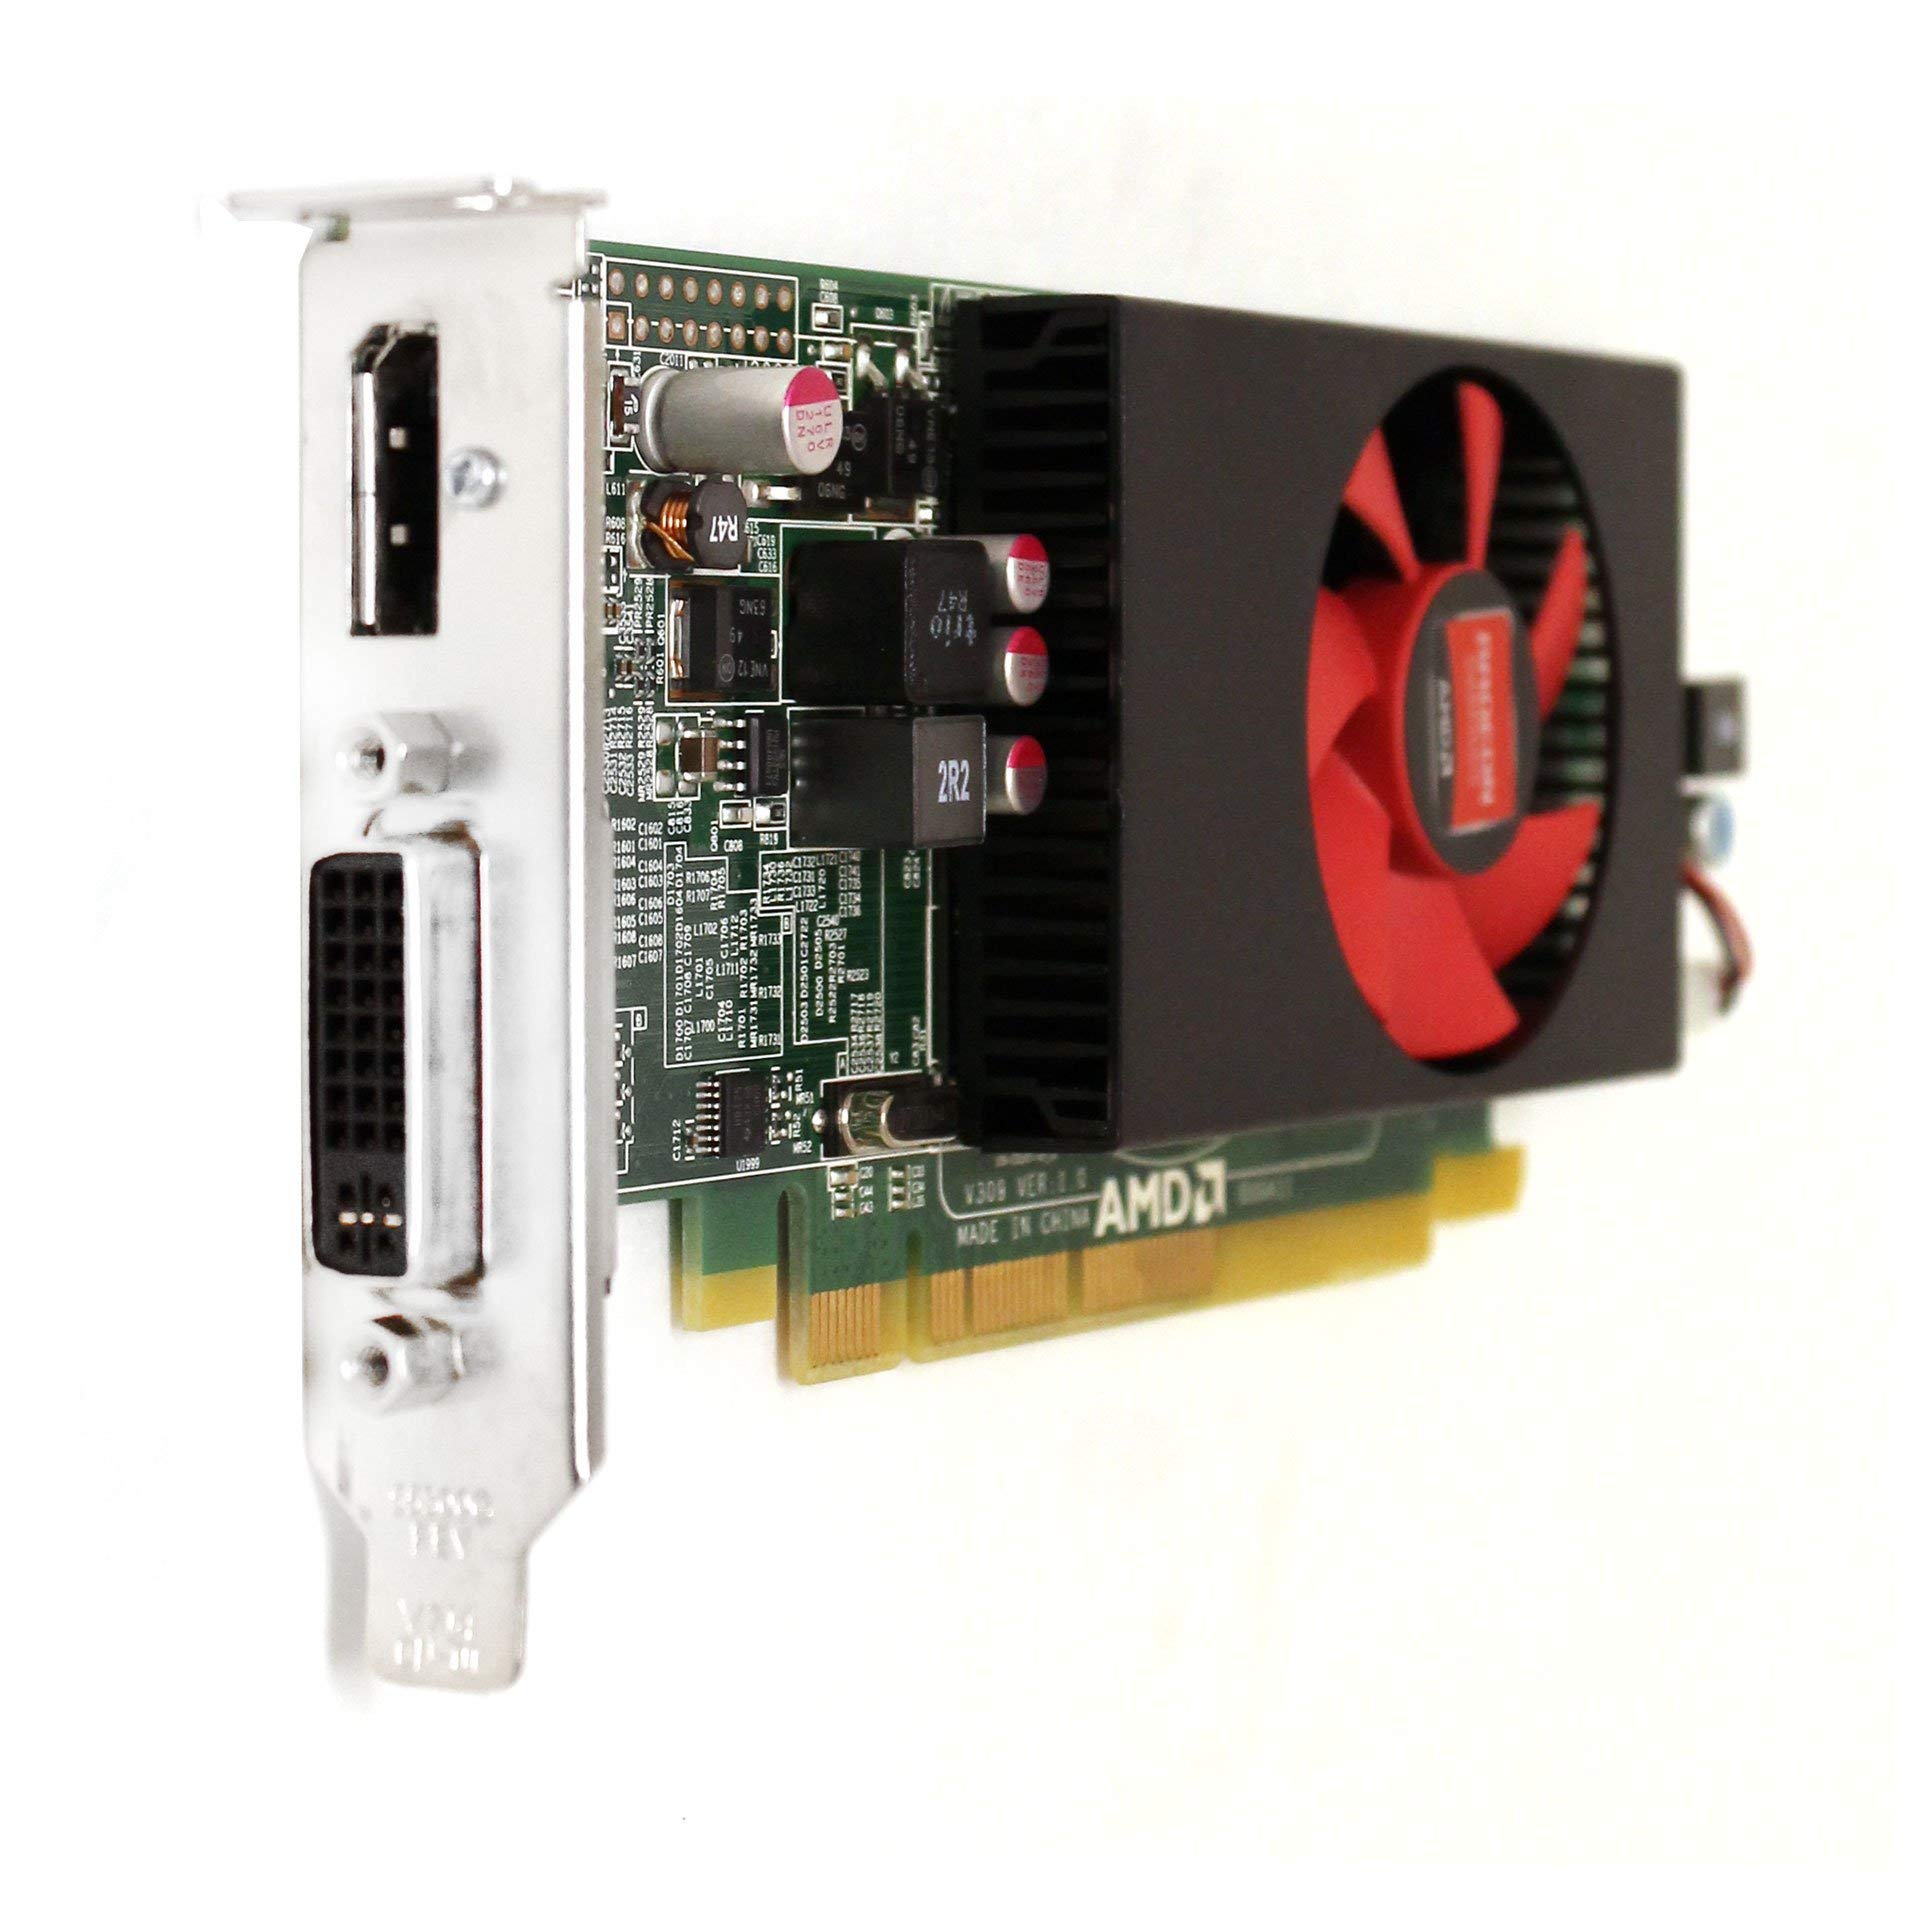 AMD Radeon R5 240 1GB DDR3 ビデオカード PCI-e DVI ディスプレイポート Dell F9P1R 再生品